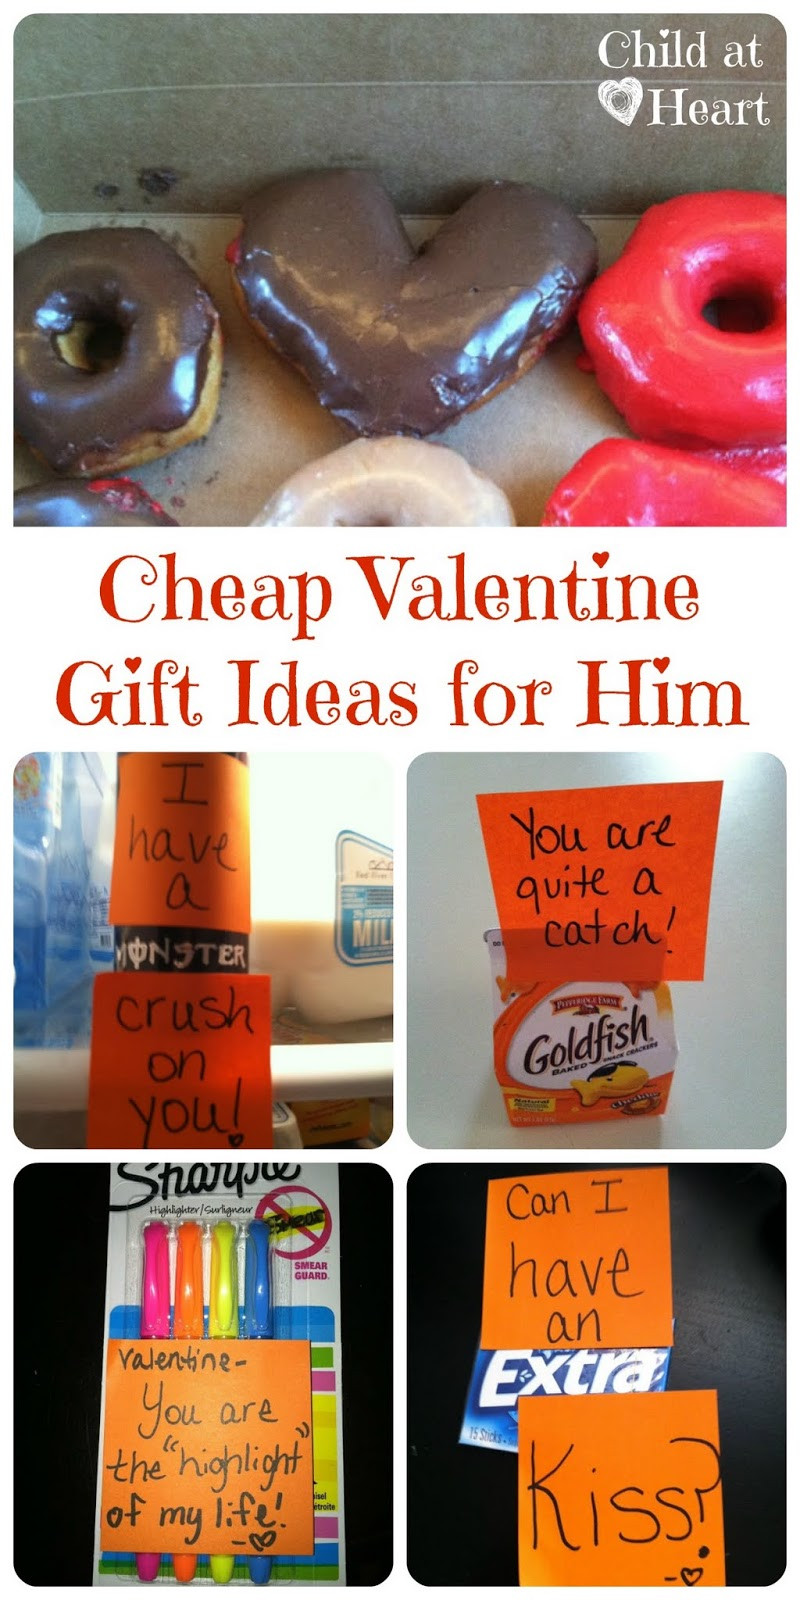 Valentine Gift Ideas Cheap
 Cheap Valentine Gift Ideas for Him Child at Heart Blog